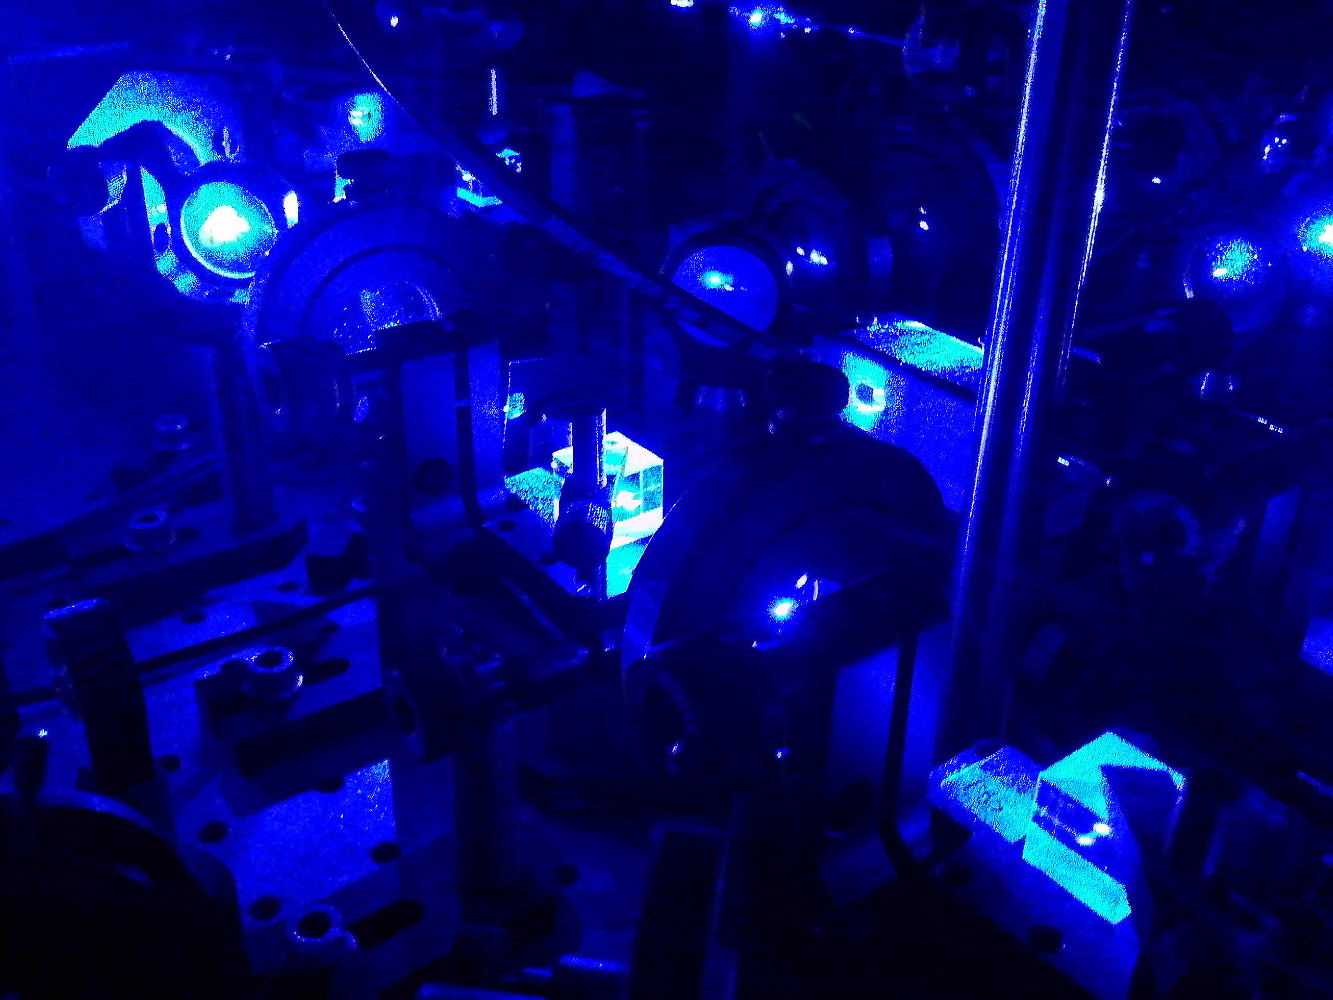 Laser light through some components of the MOT setup